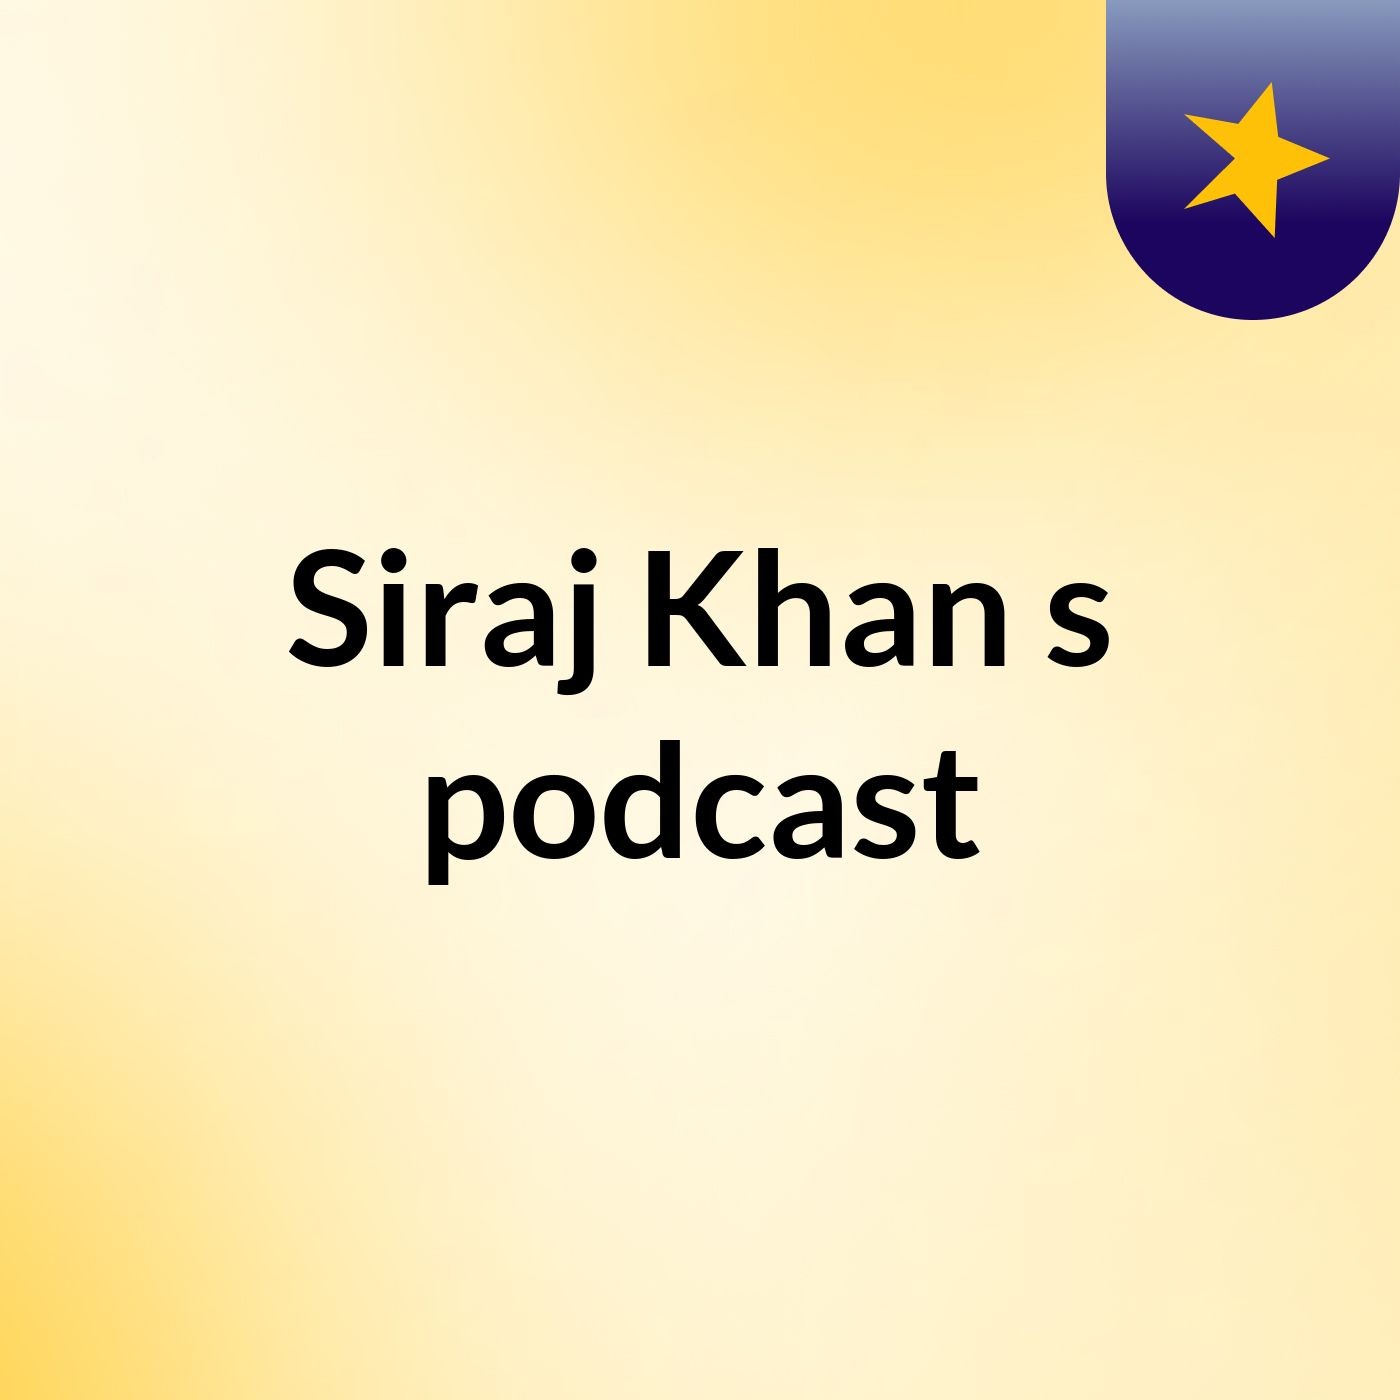 Siraj Khan's podcast